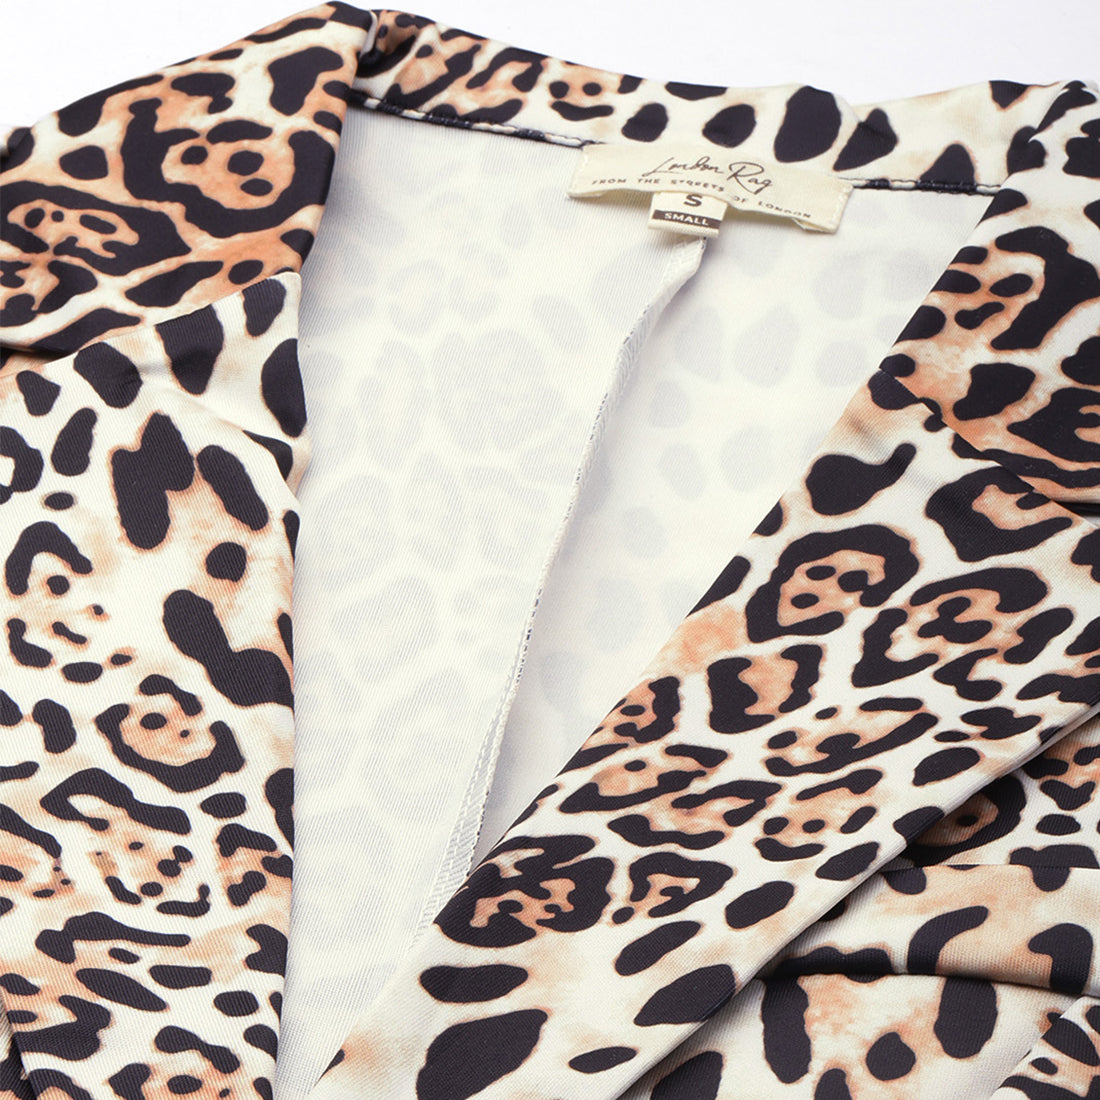 Multicolor Leopard Print Casual Blazer